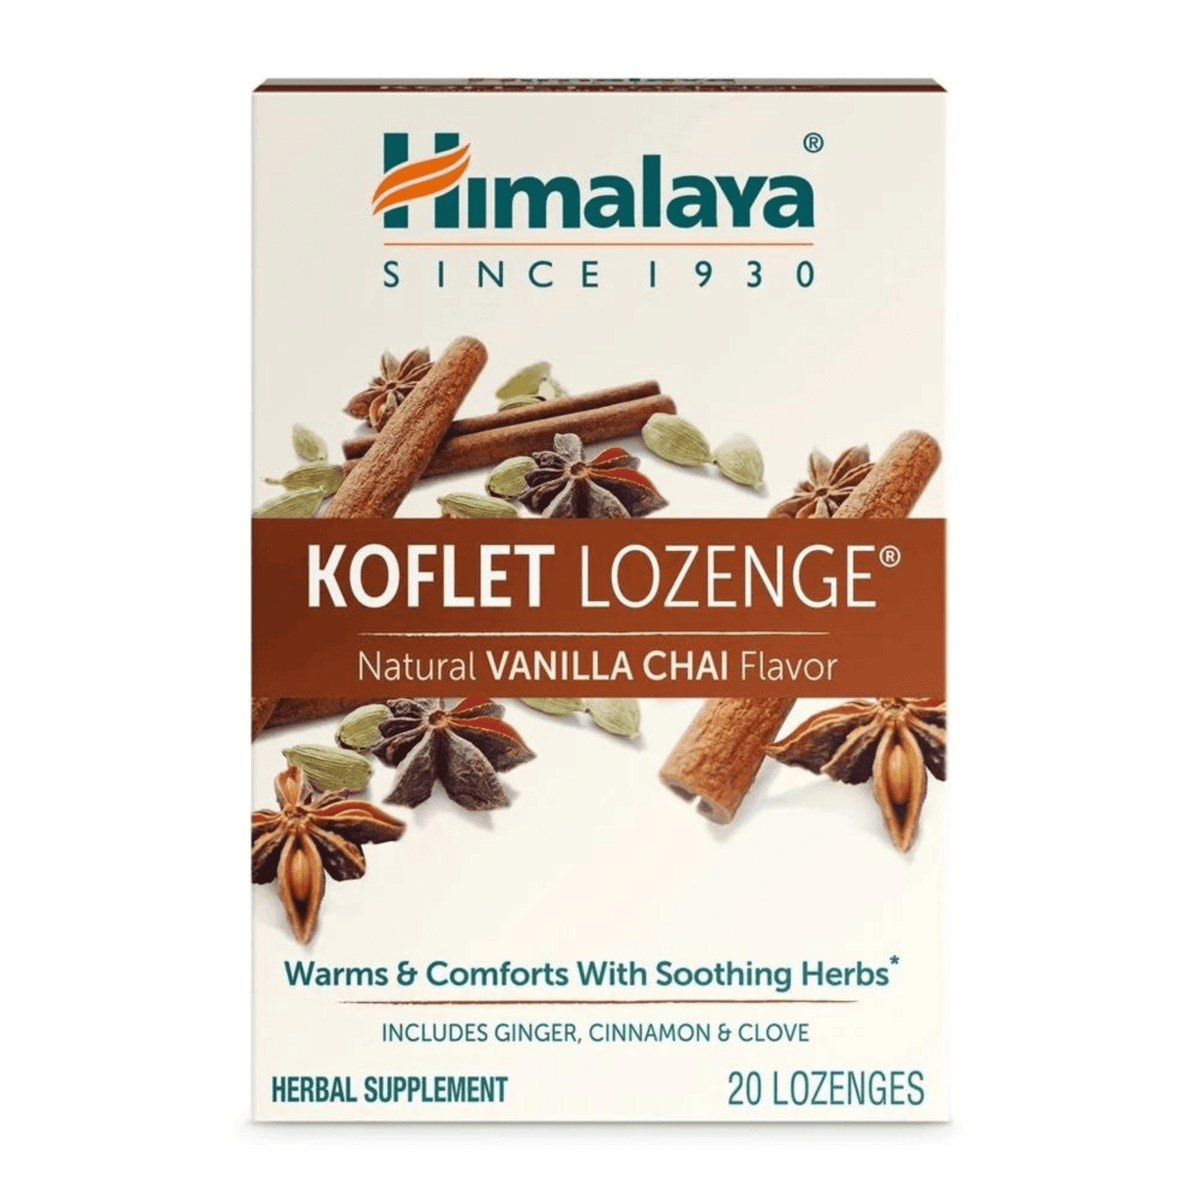 Primary Image of Vanilla Chai Koflet Lozenge